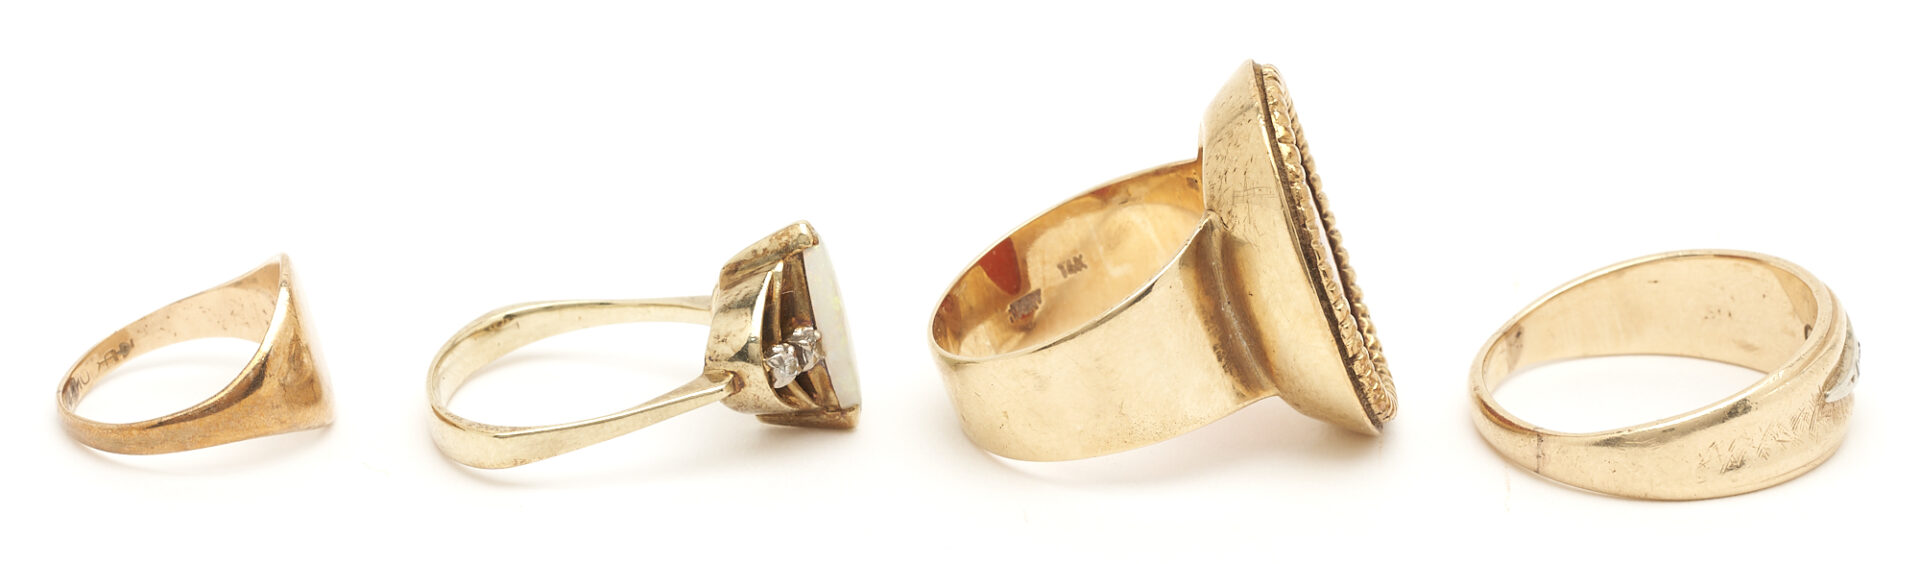 Lot 918: 4 Gold & Gemstone Rings